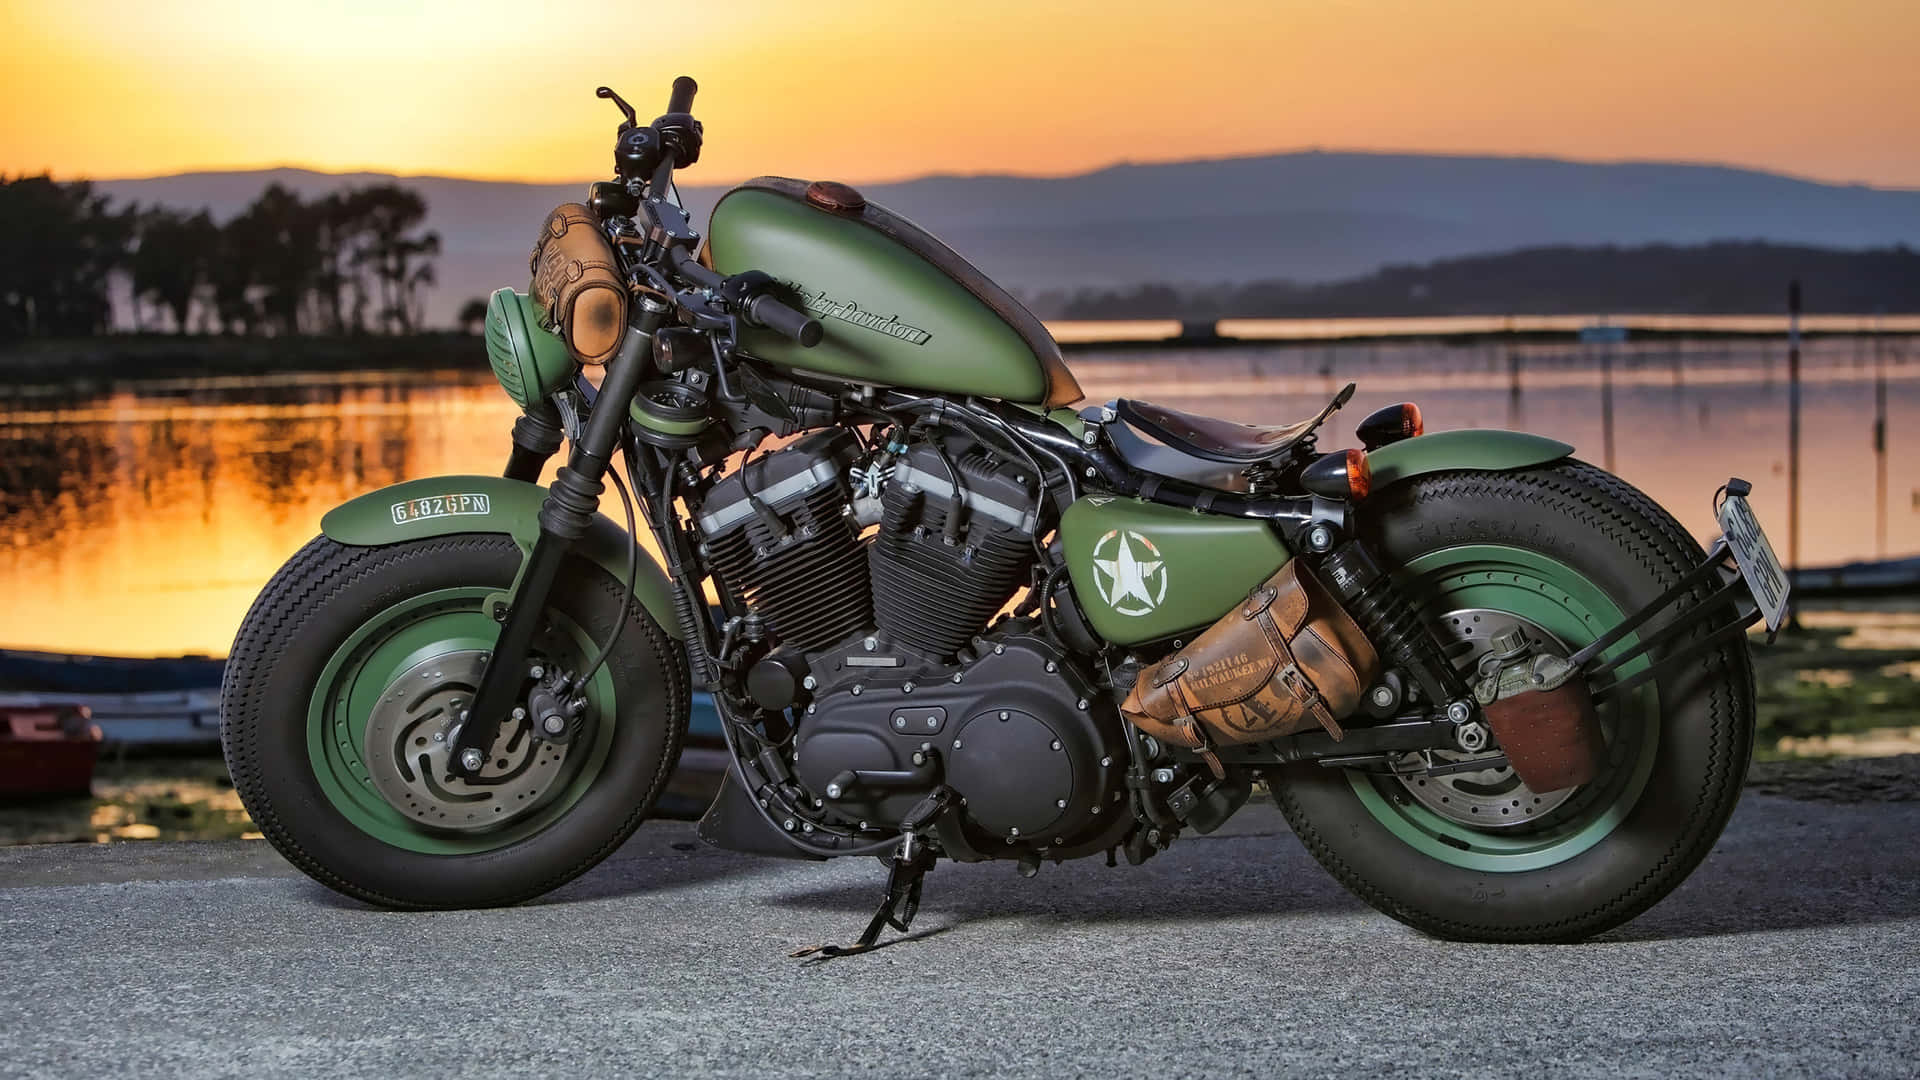 2560x1440 Harley-davidson Motorcycle Wallpaper